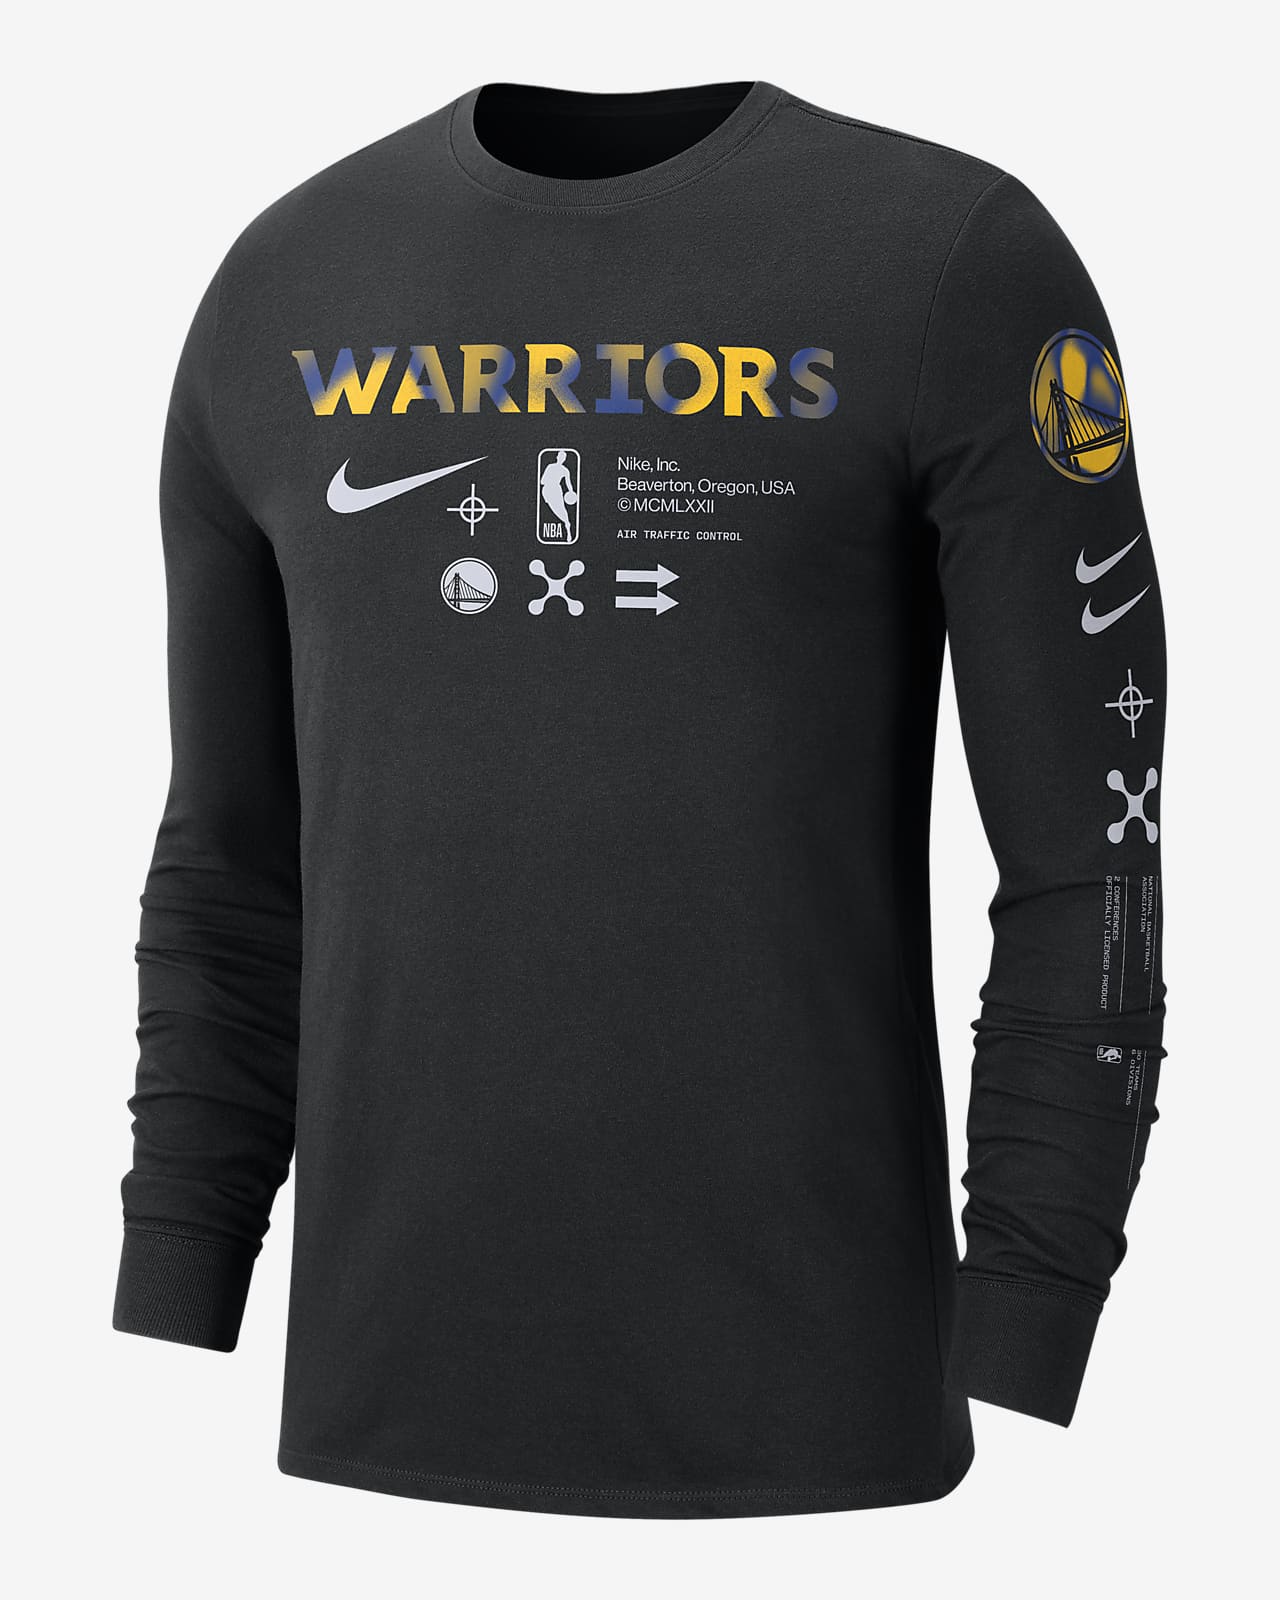 warriors t shirt nike